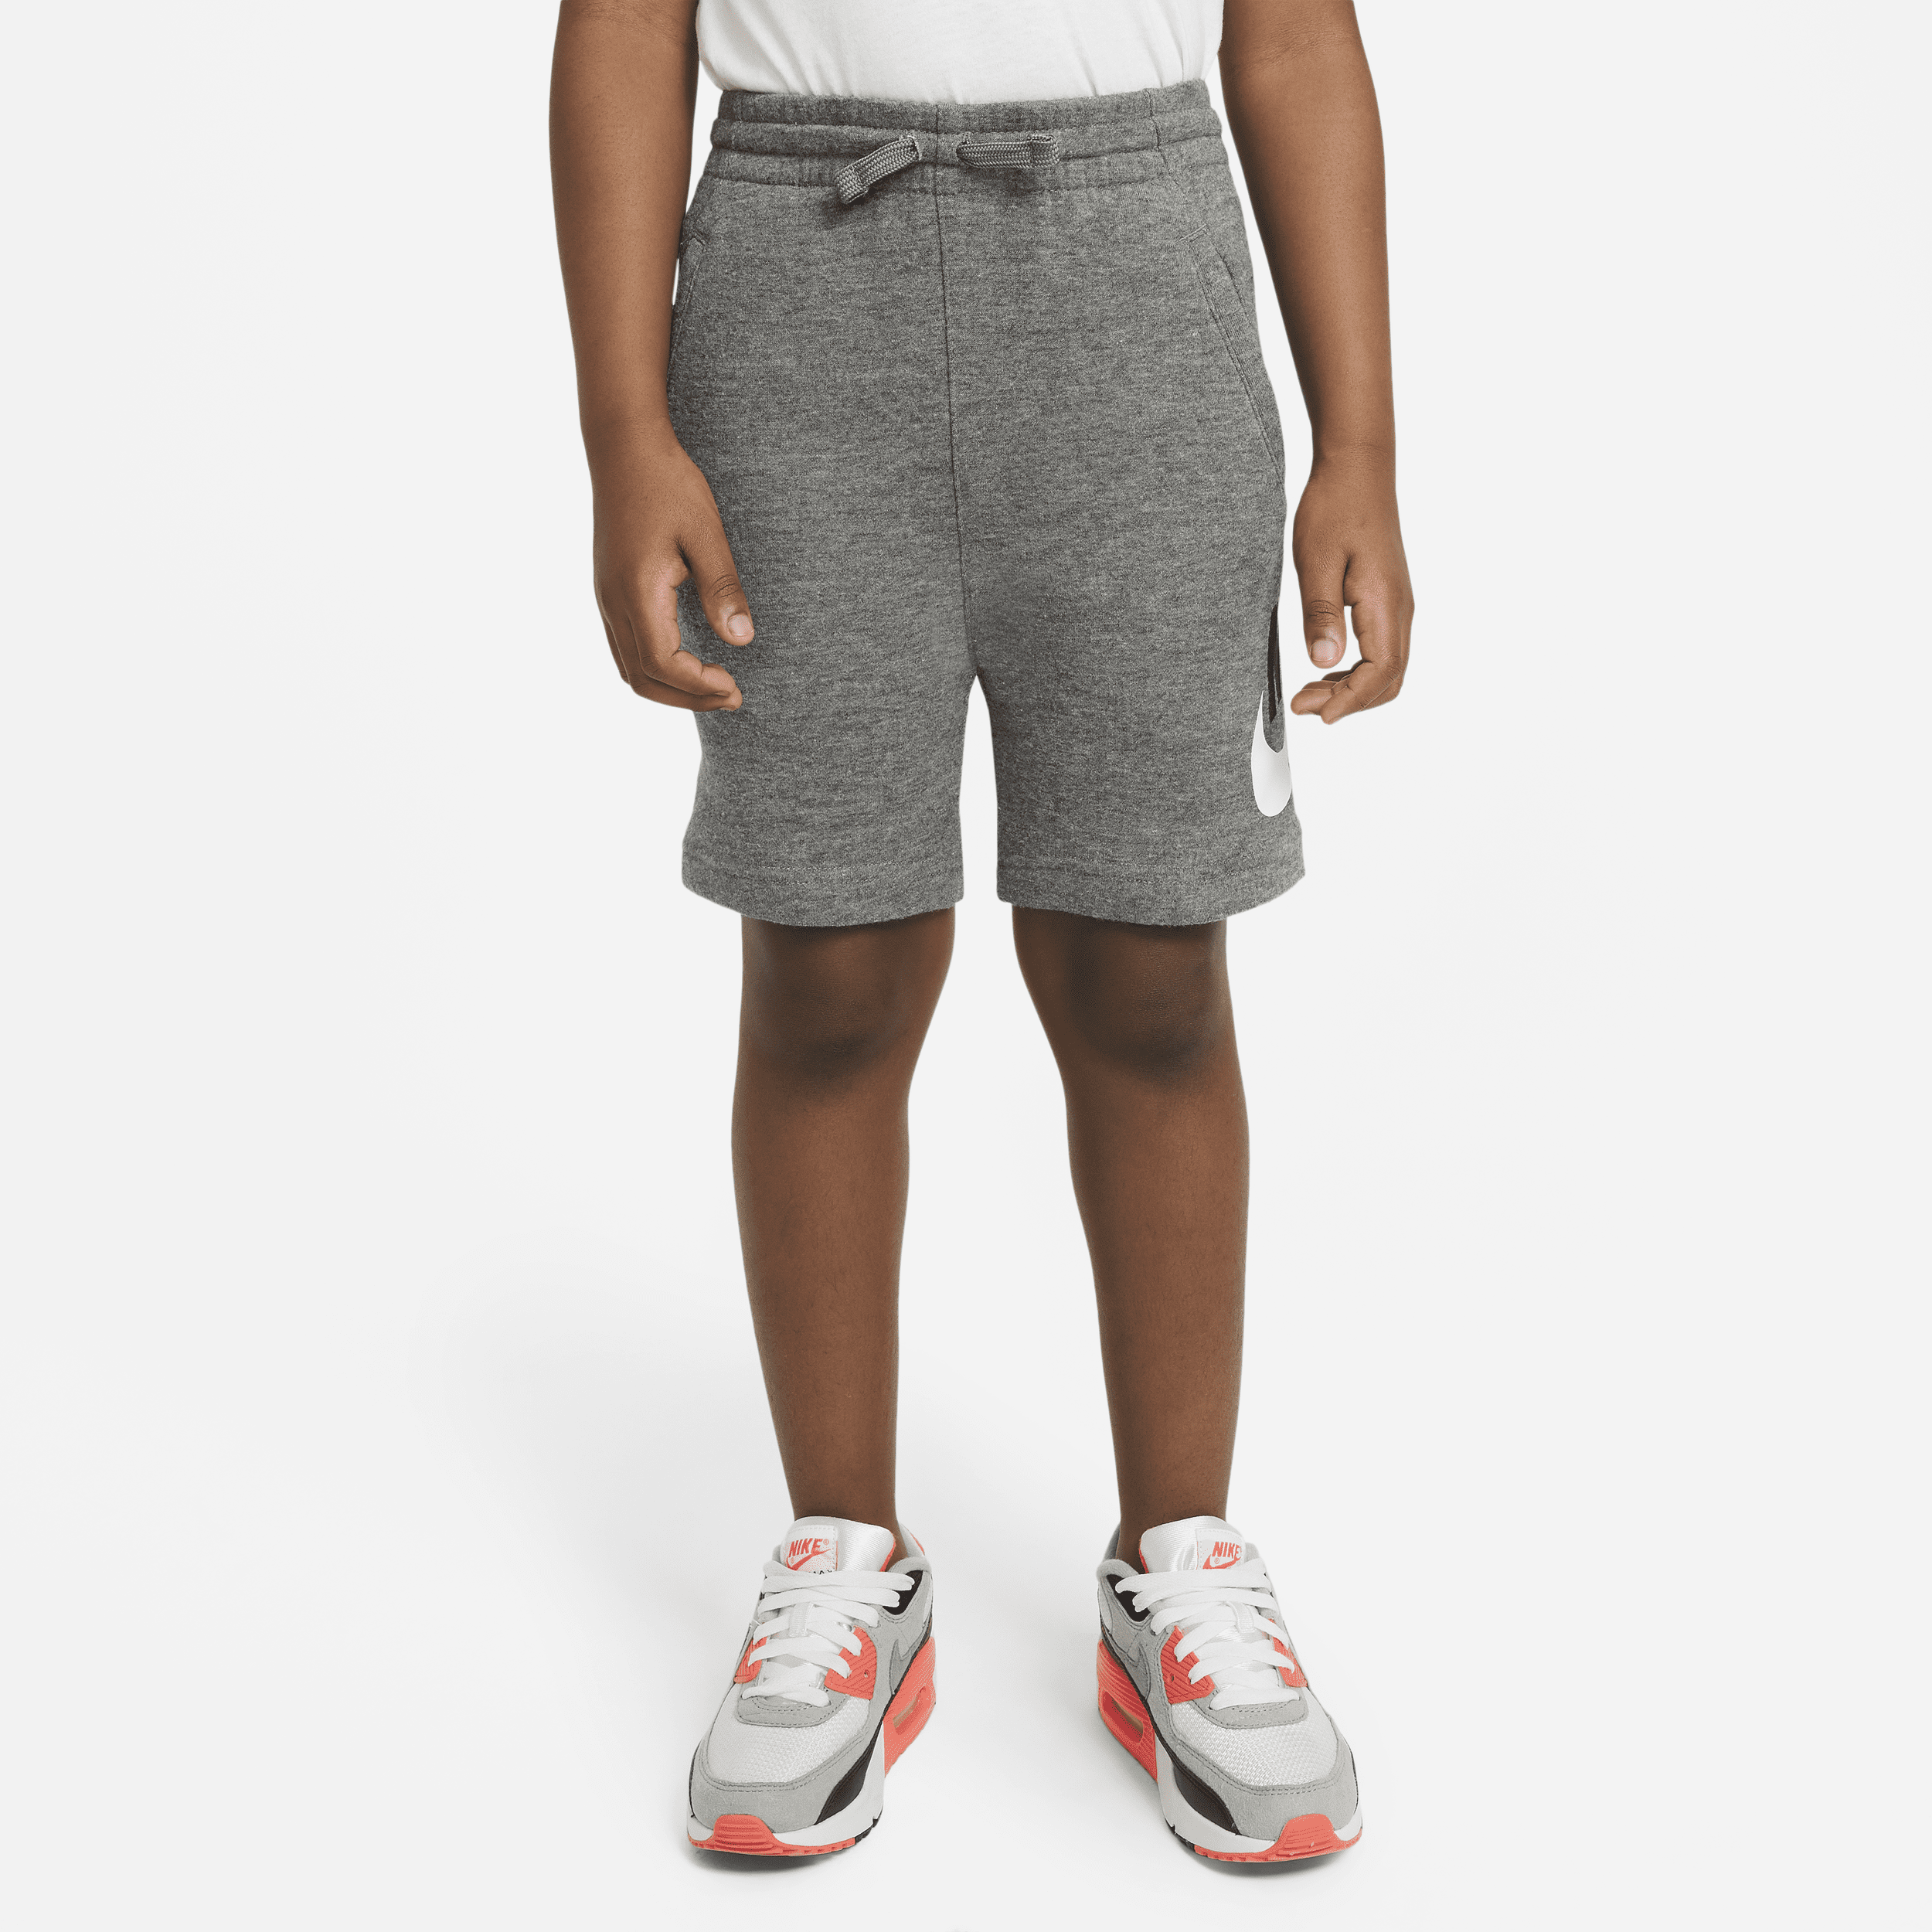 Shorts Nike – Bambino/a - Grigio